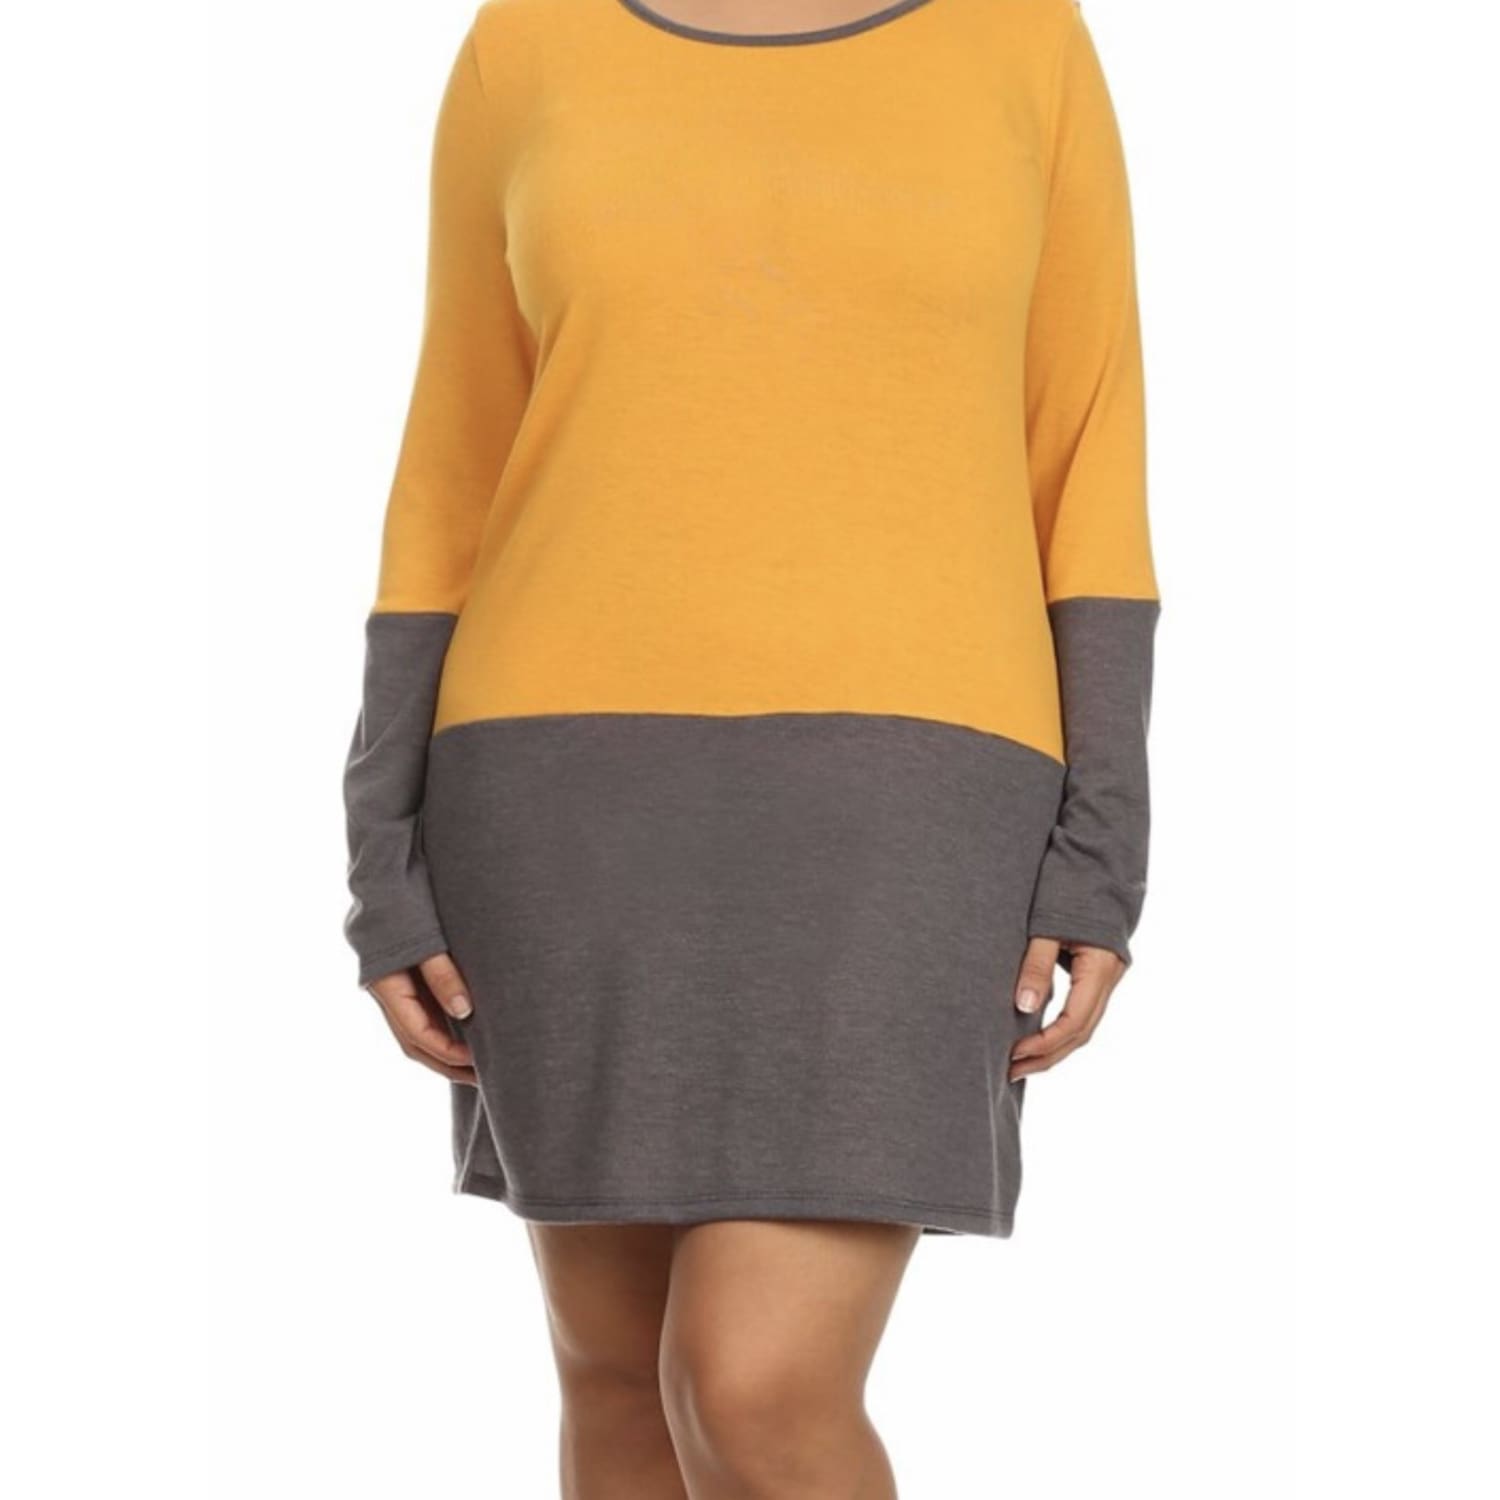 Solid Color Cotton Aline Dress in Mustard : TDU166